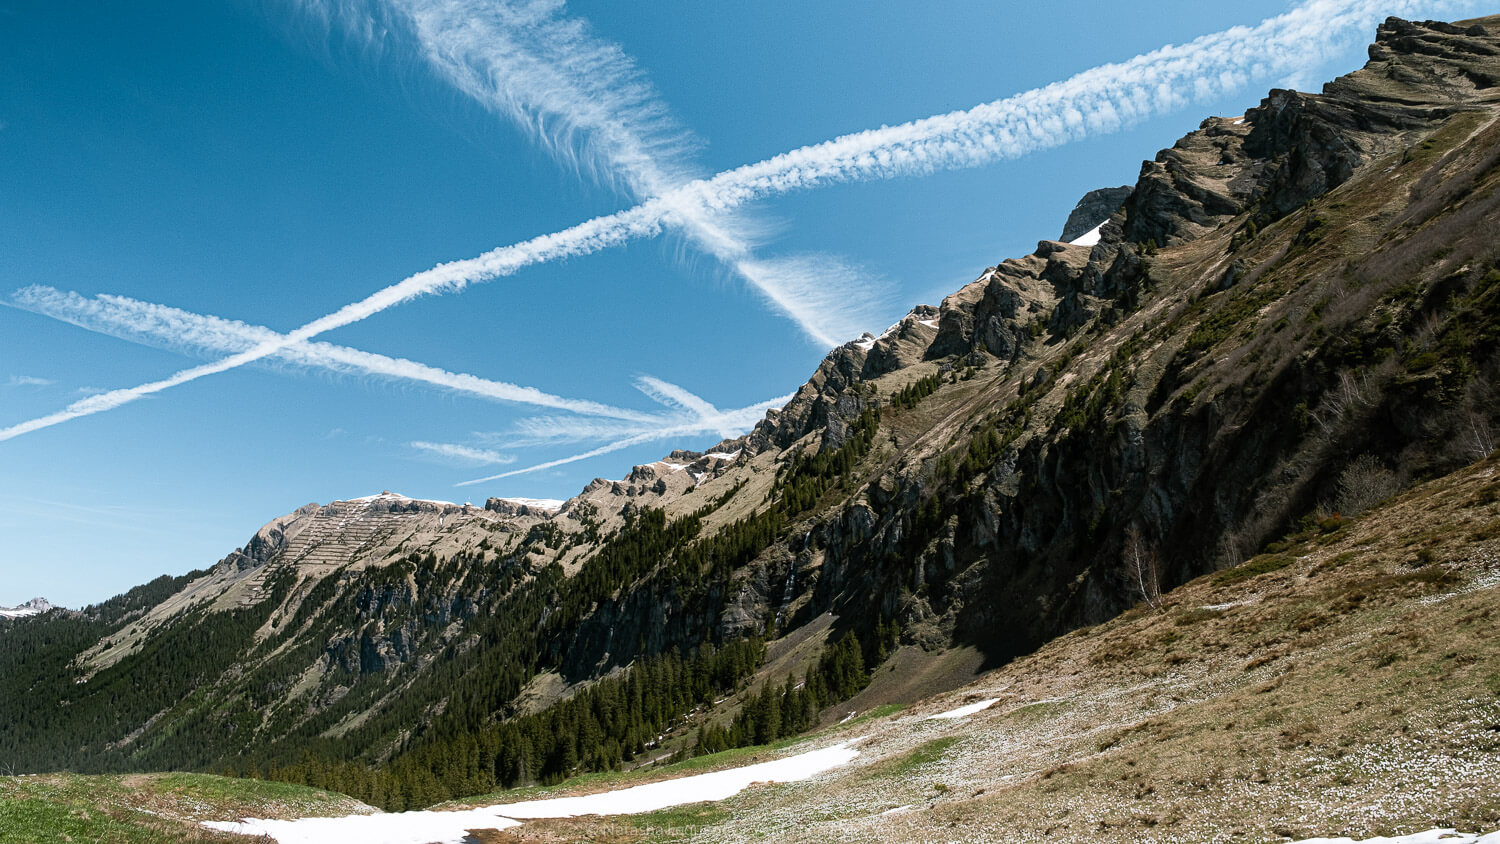 Alpine hiking from Wengen to Kleine Scheidegg. Travel photography and guide by © Natasha Lequepeys for "And Then I Met Yoko". #wengen #jungfrau #travelphotography #switzerland